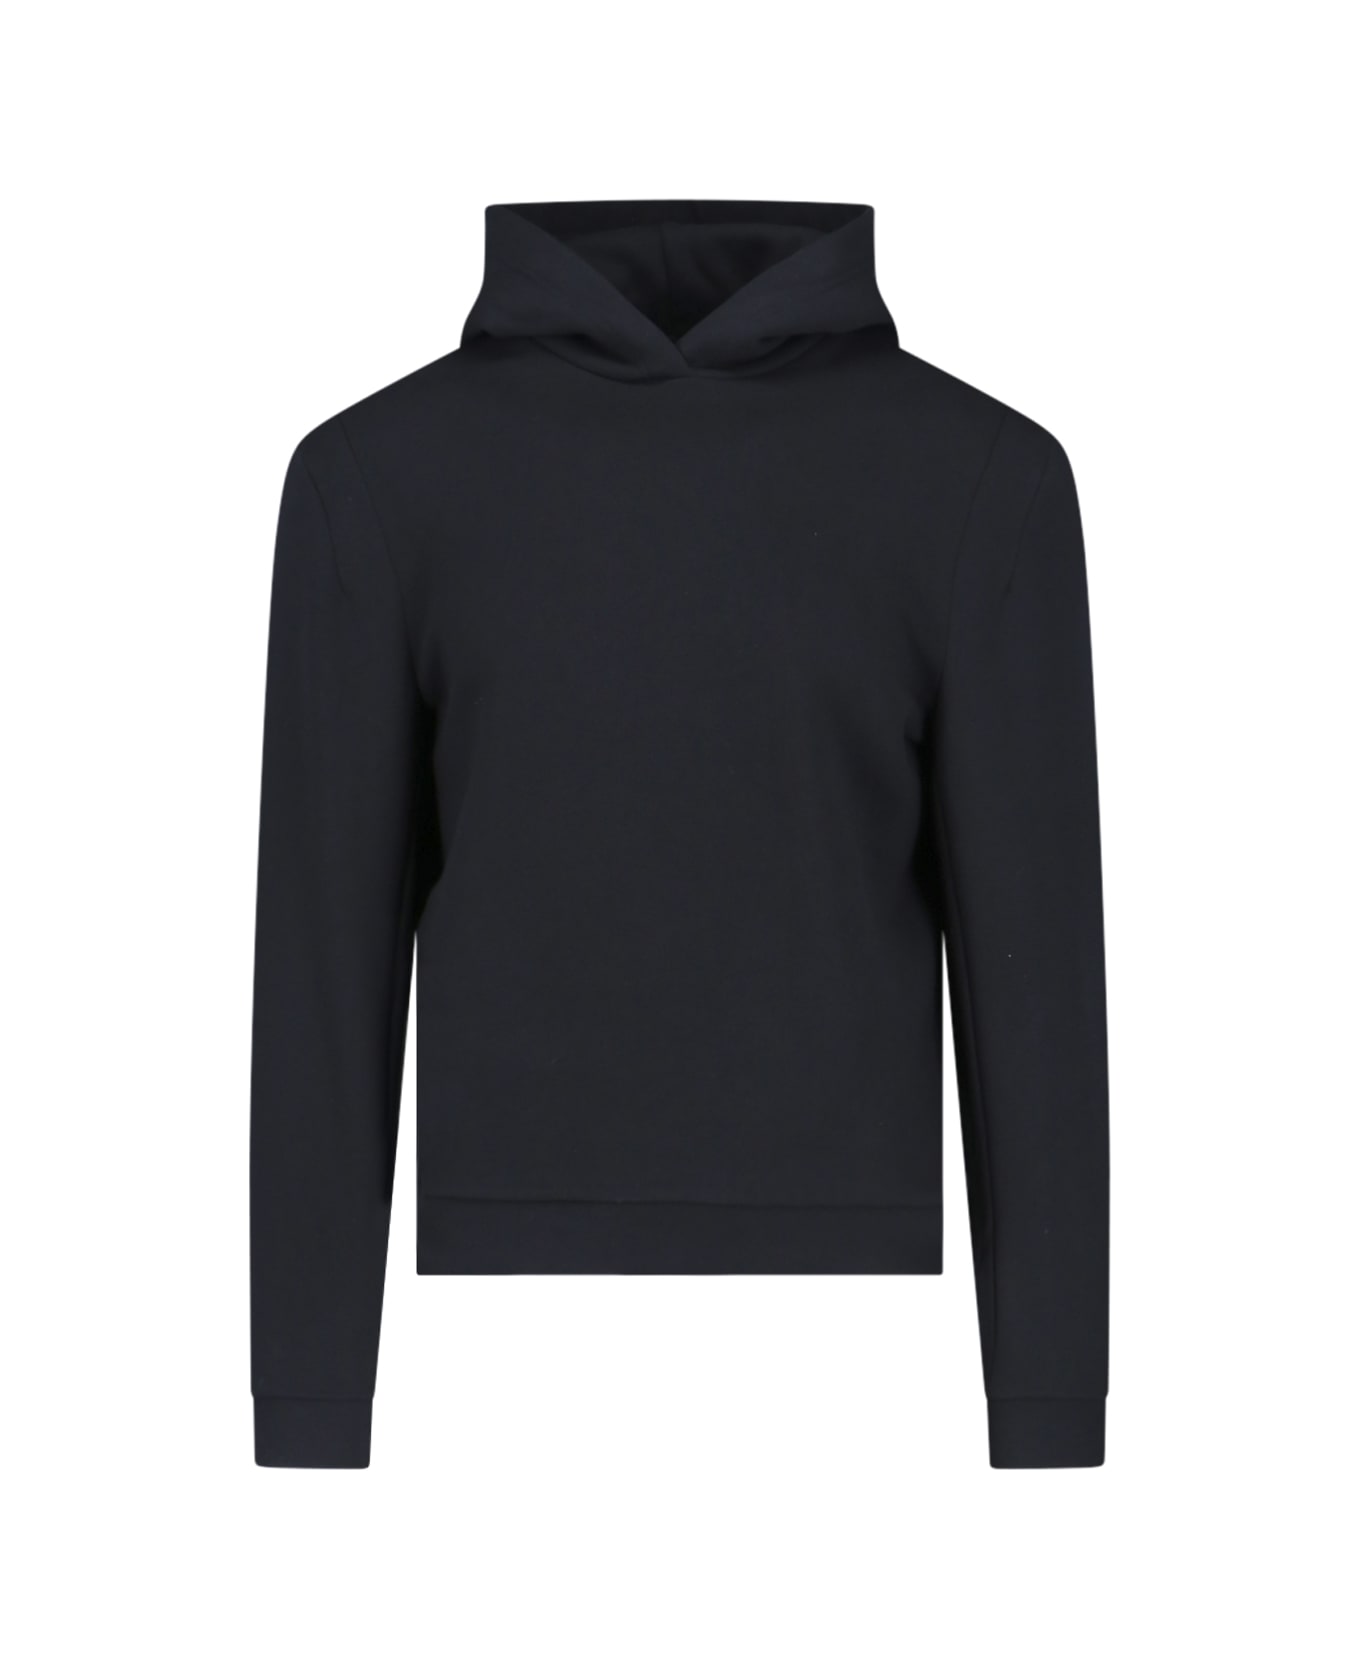 Random Identities Sweater - Black